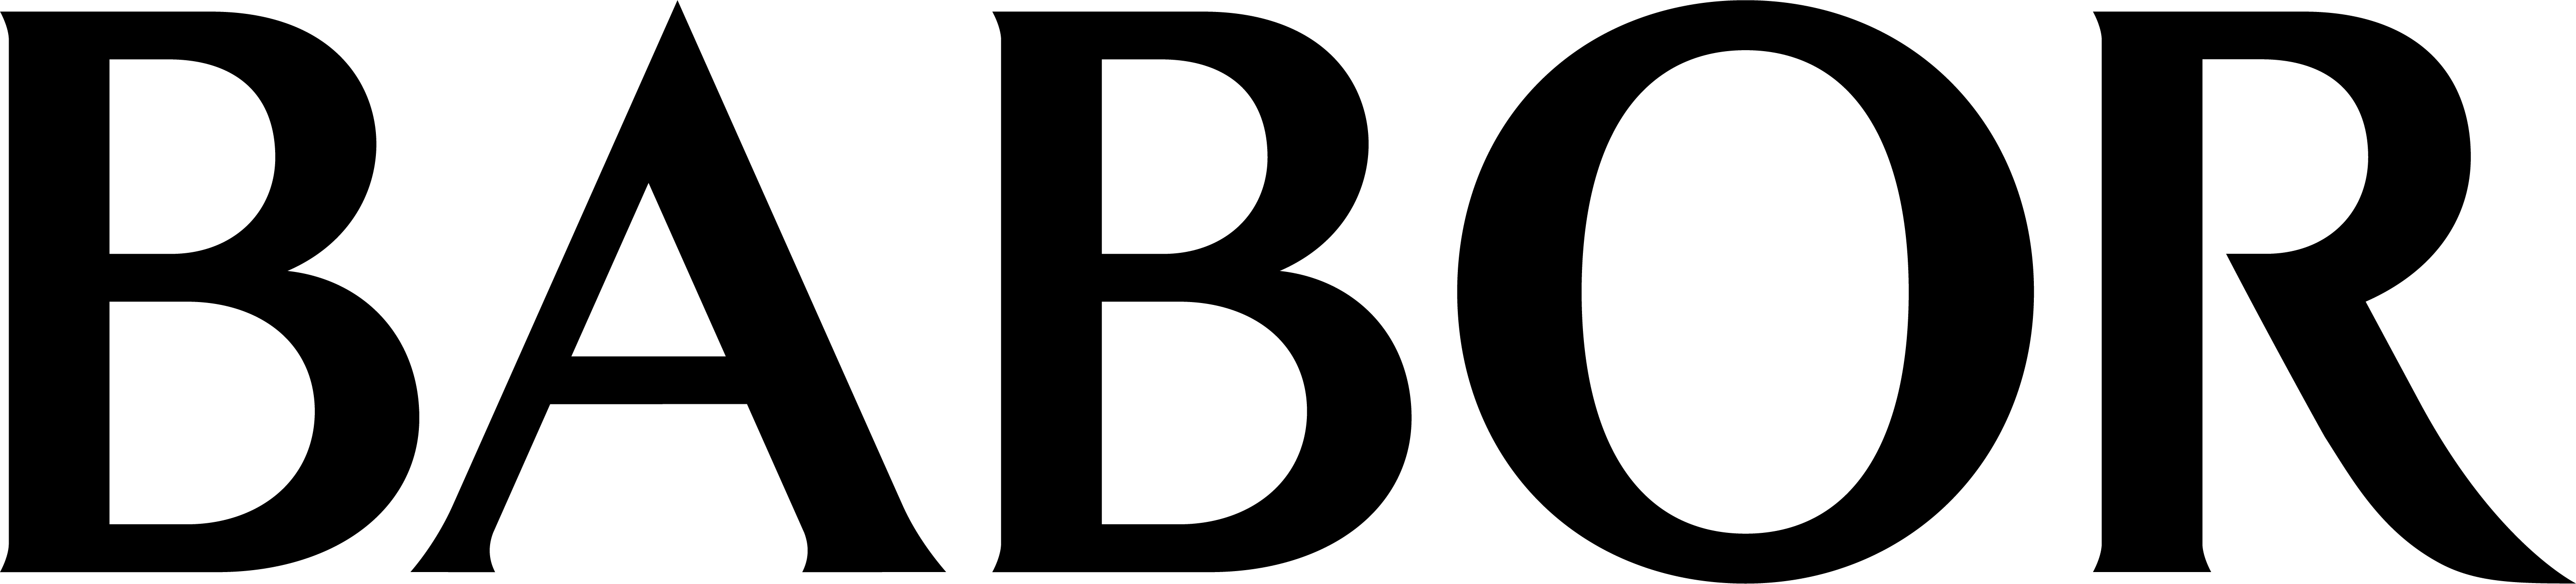 RZ_BABOR_Logo_WithoutClaim_Black